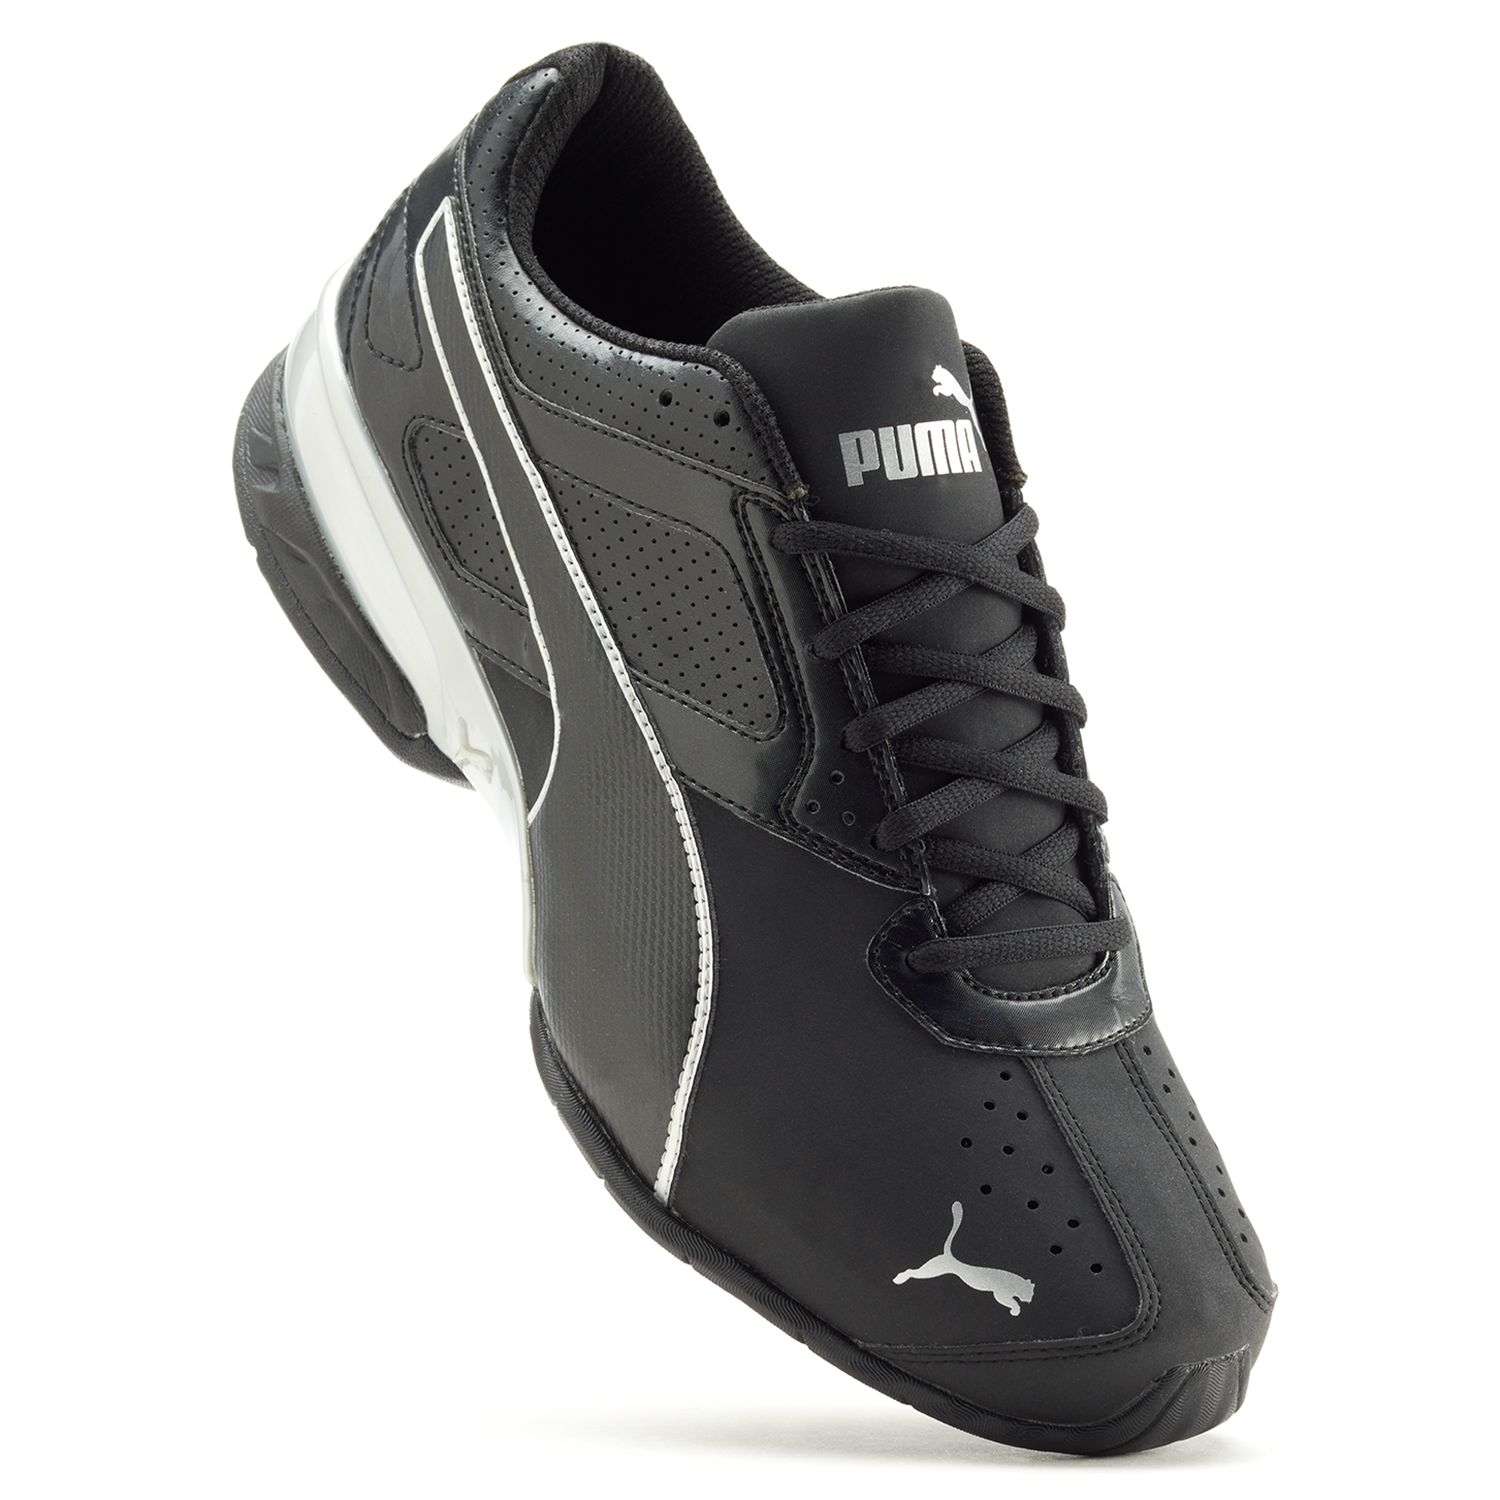 puma tazon 6 fm men's running shoes